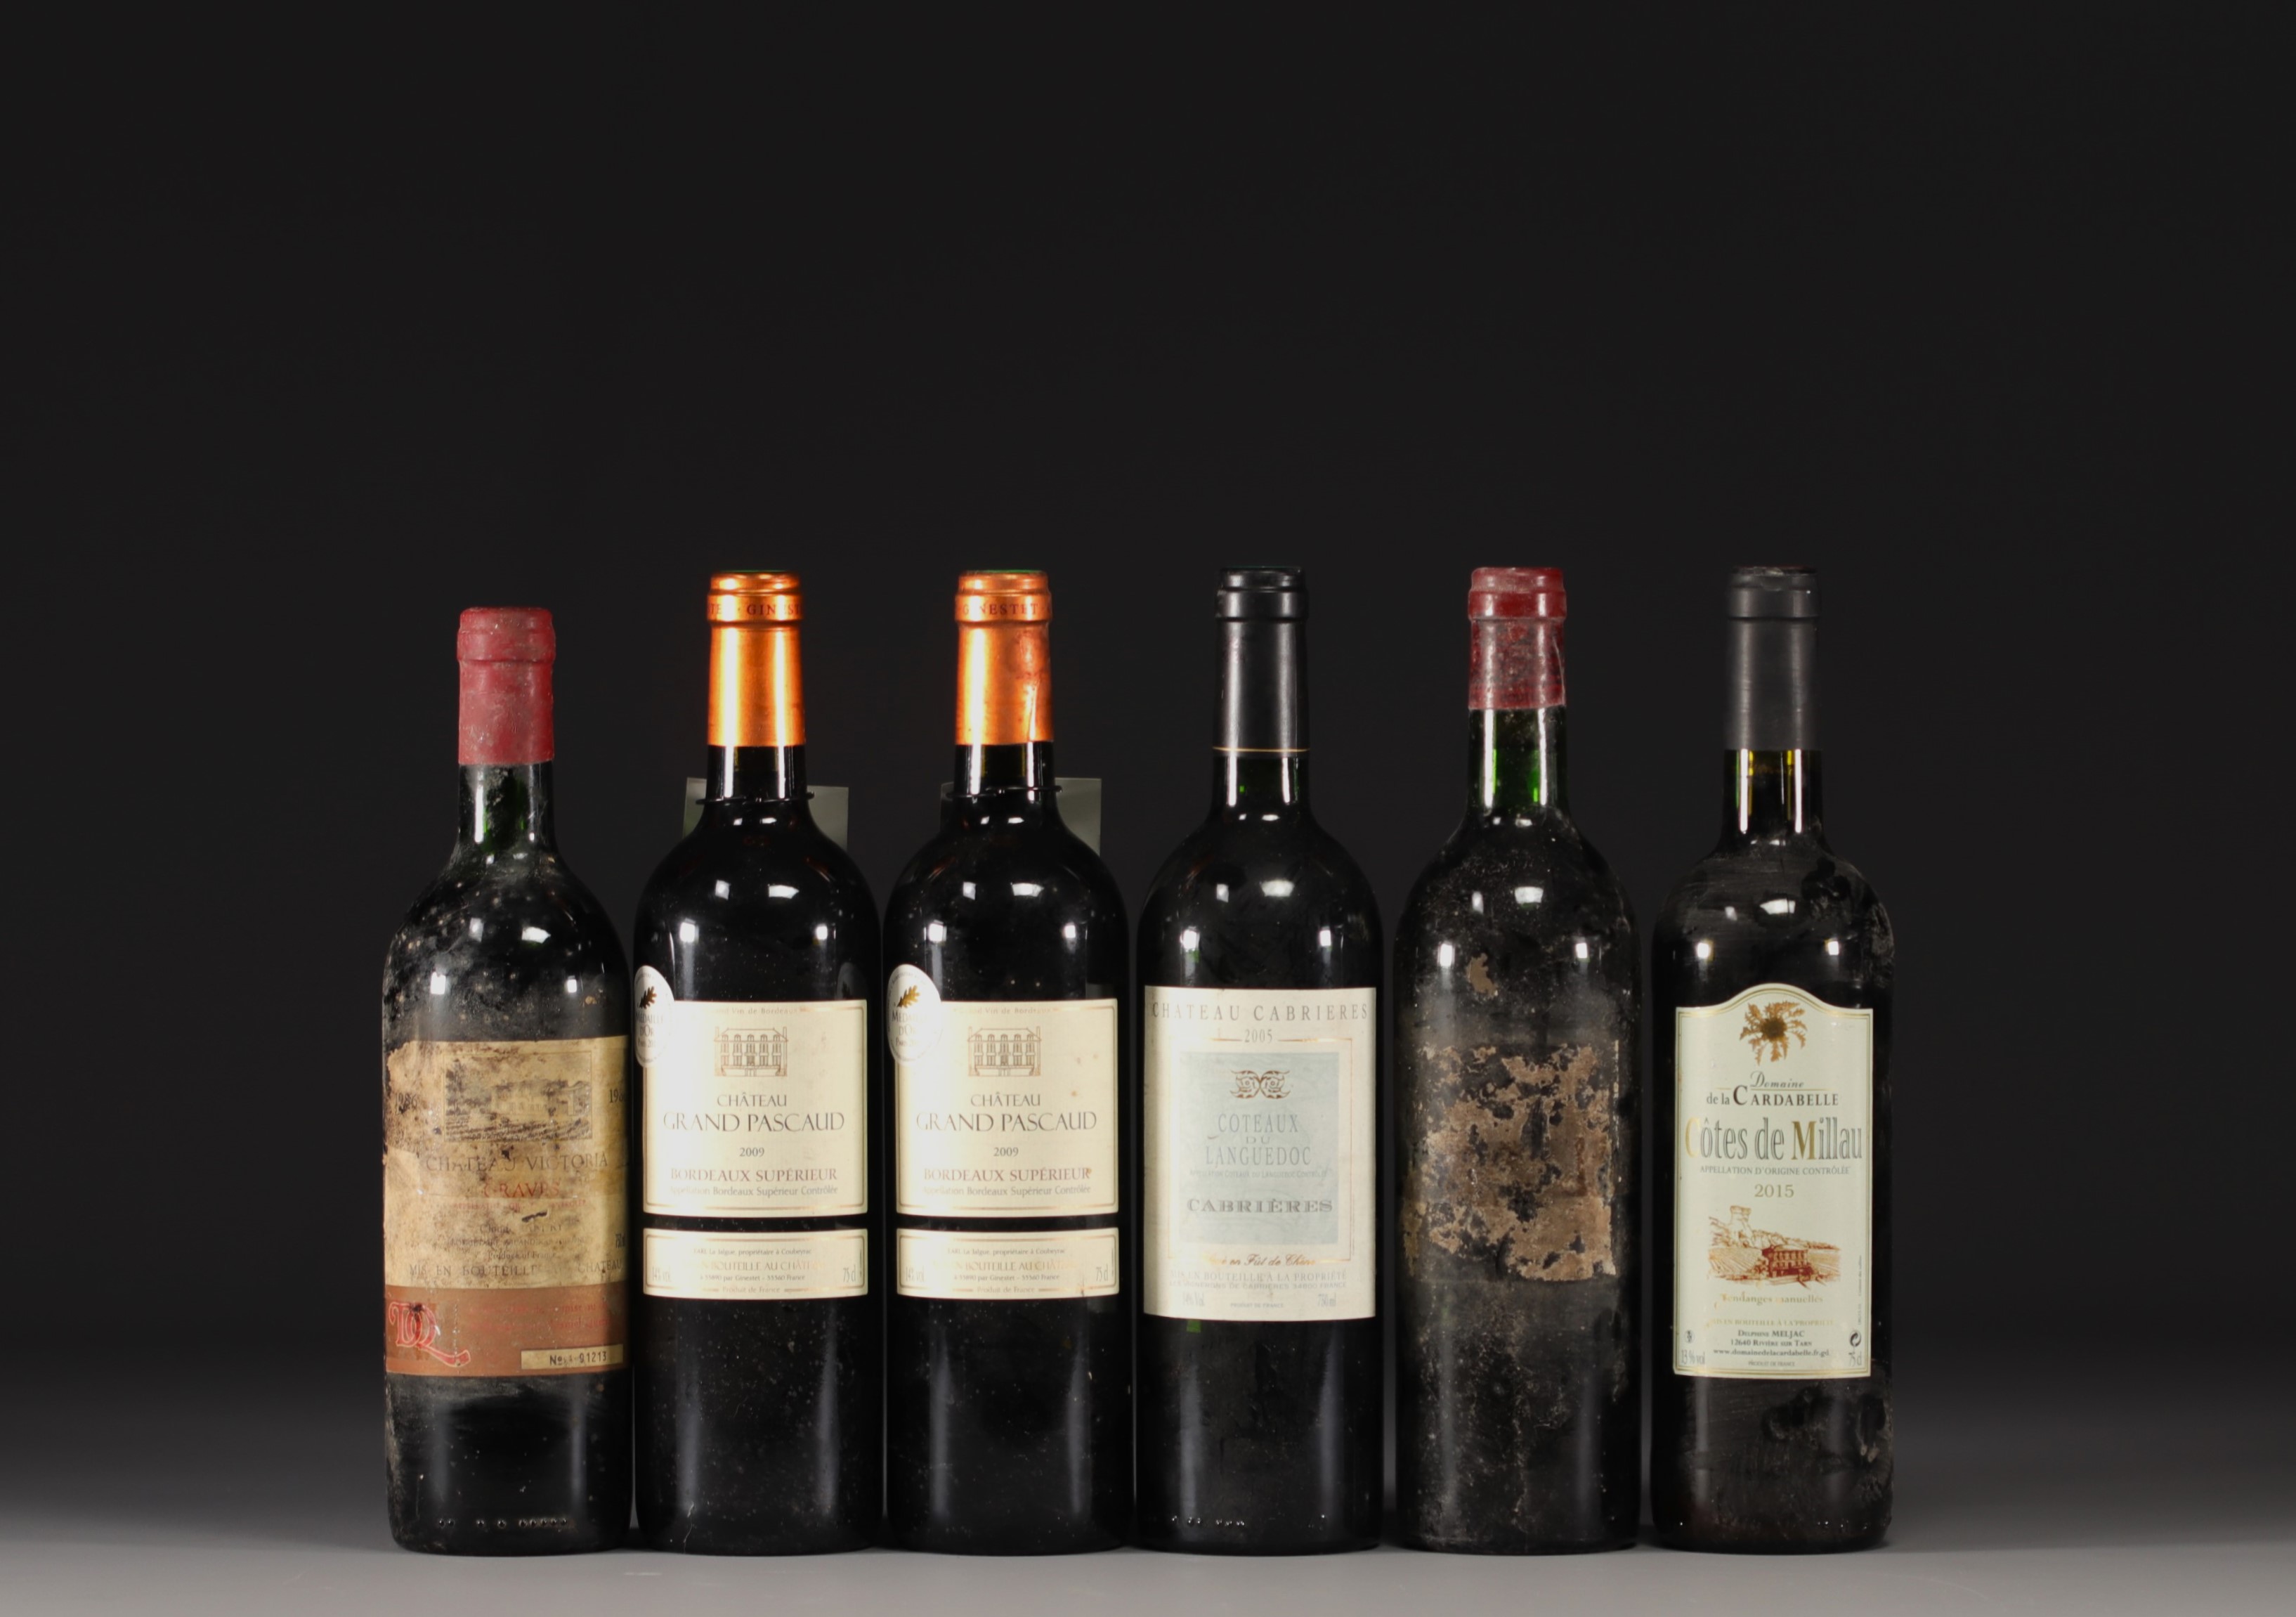 Set of 13 bottles of wine from various regions.